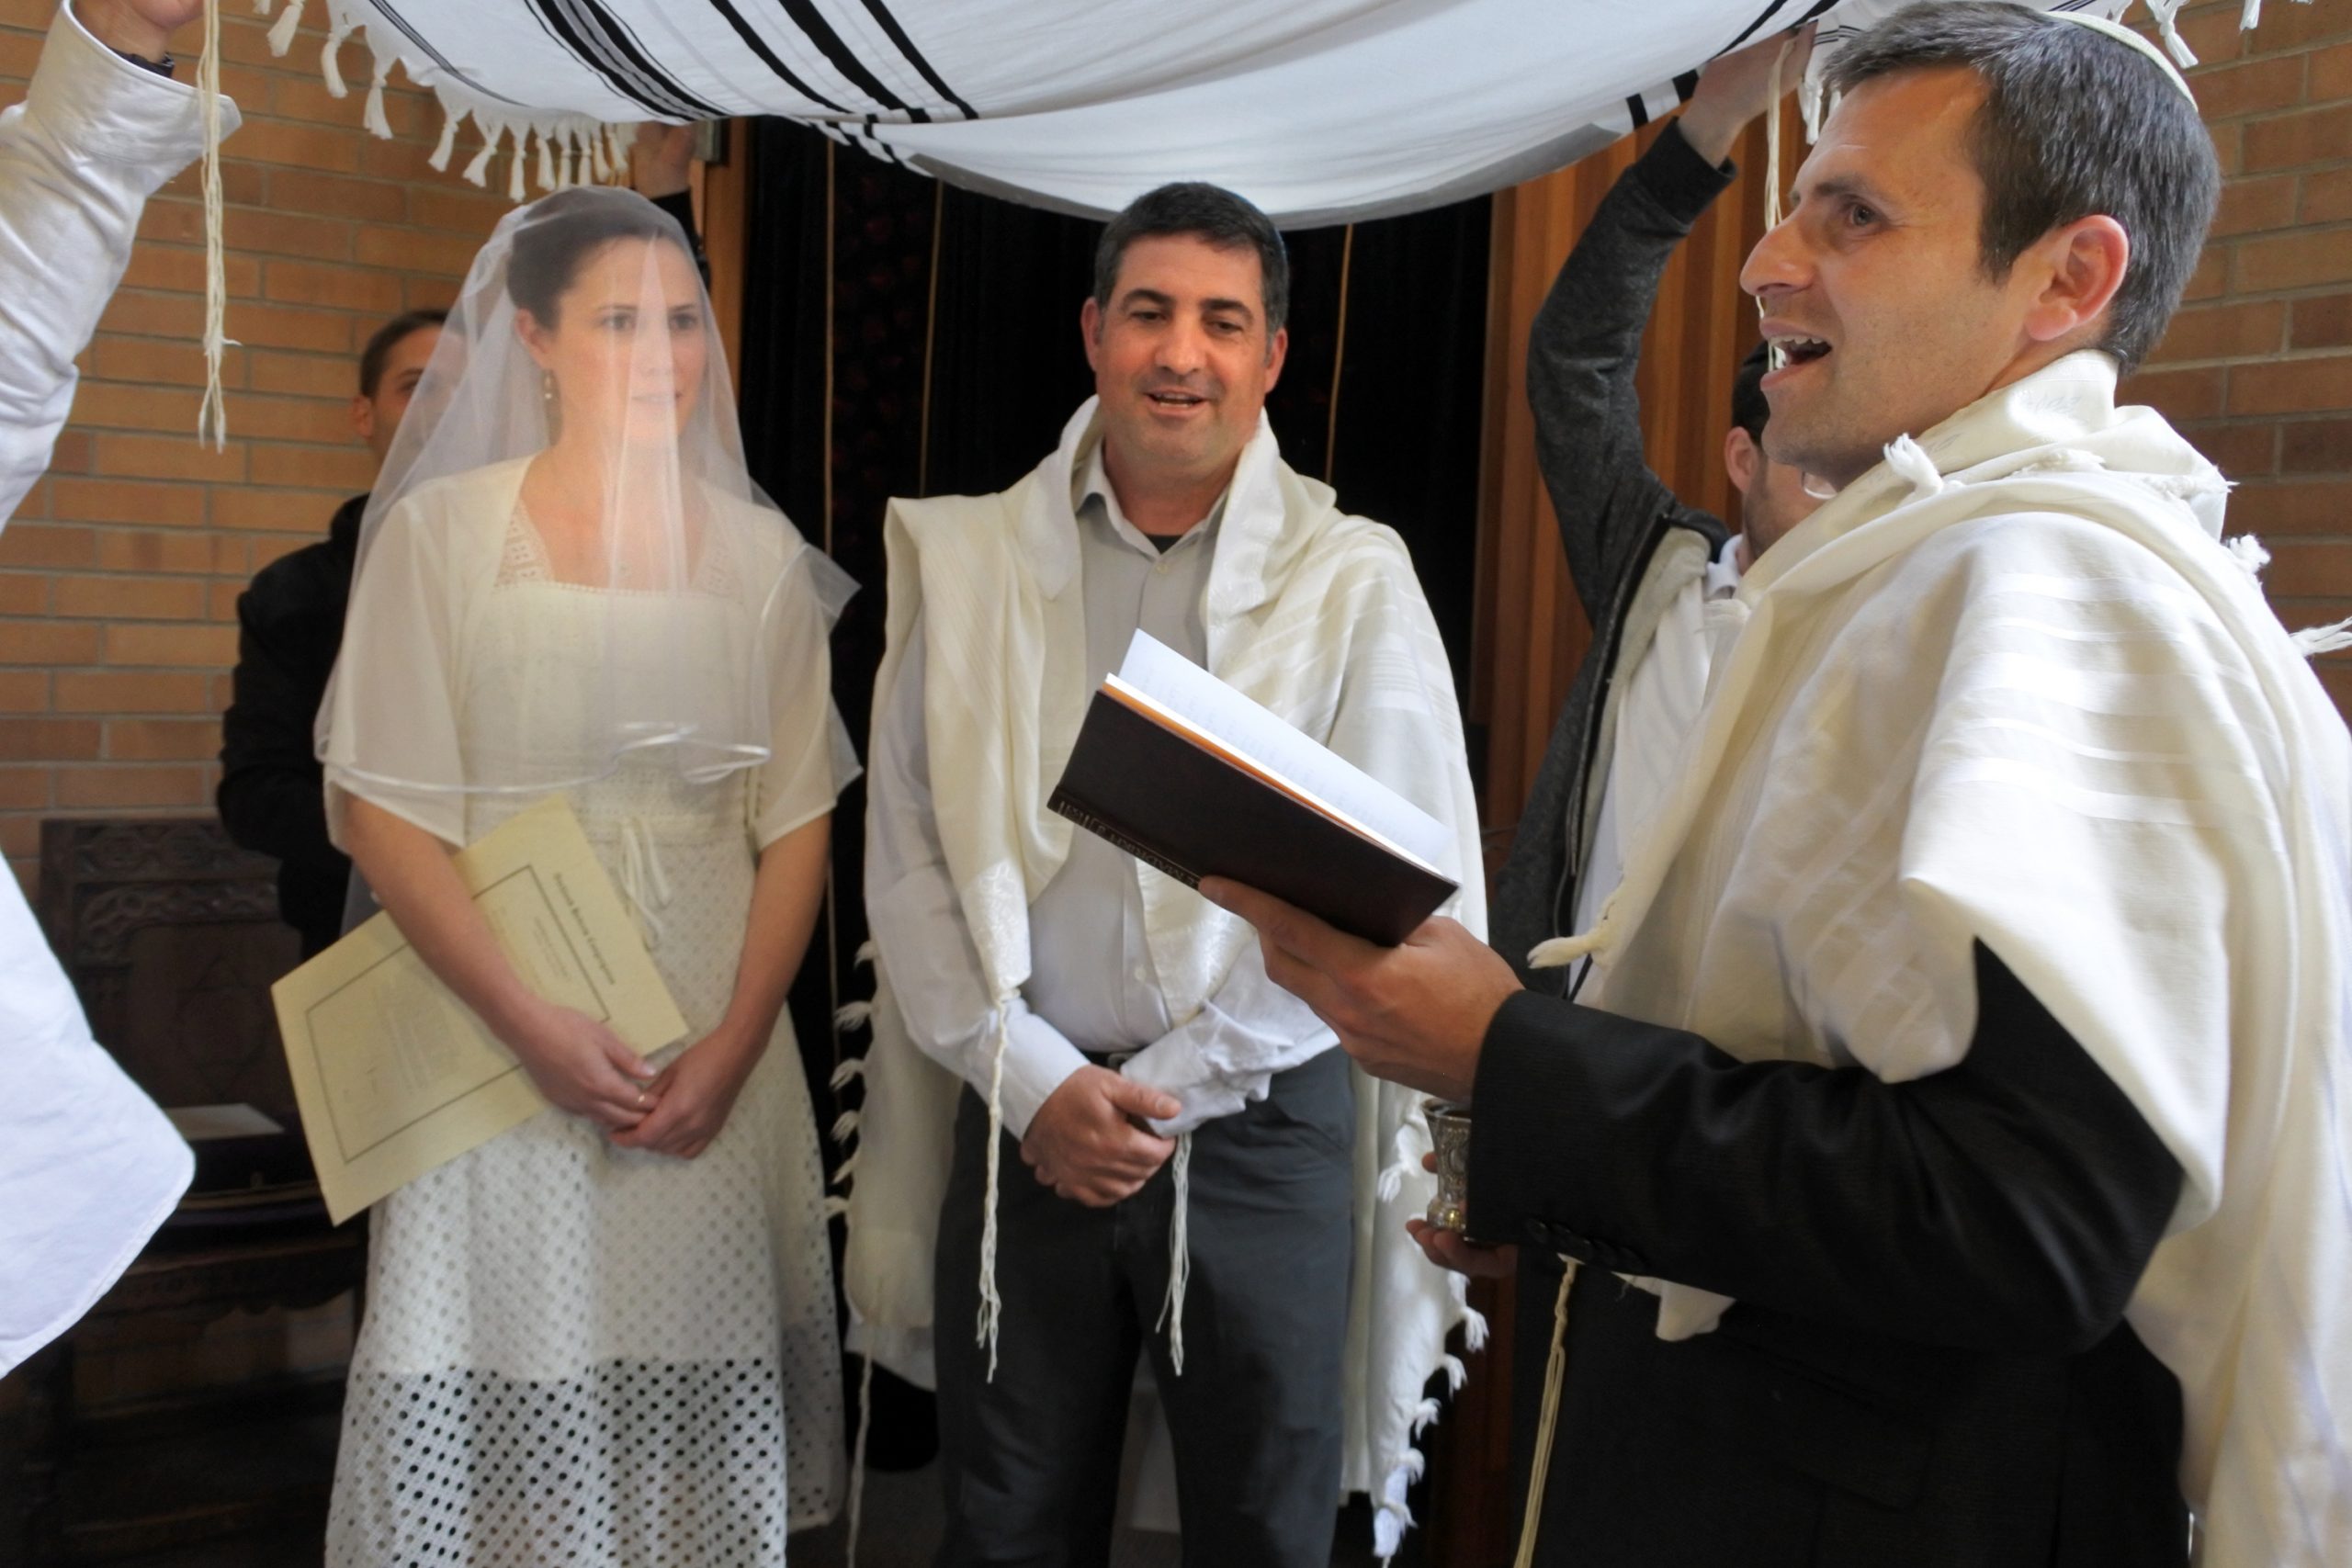 Rabbi blessing Jewish bride and a bridegroom in Jewish wedding ceremony